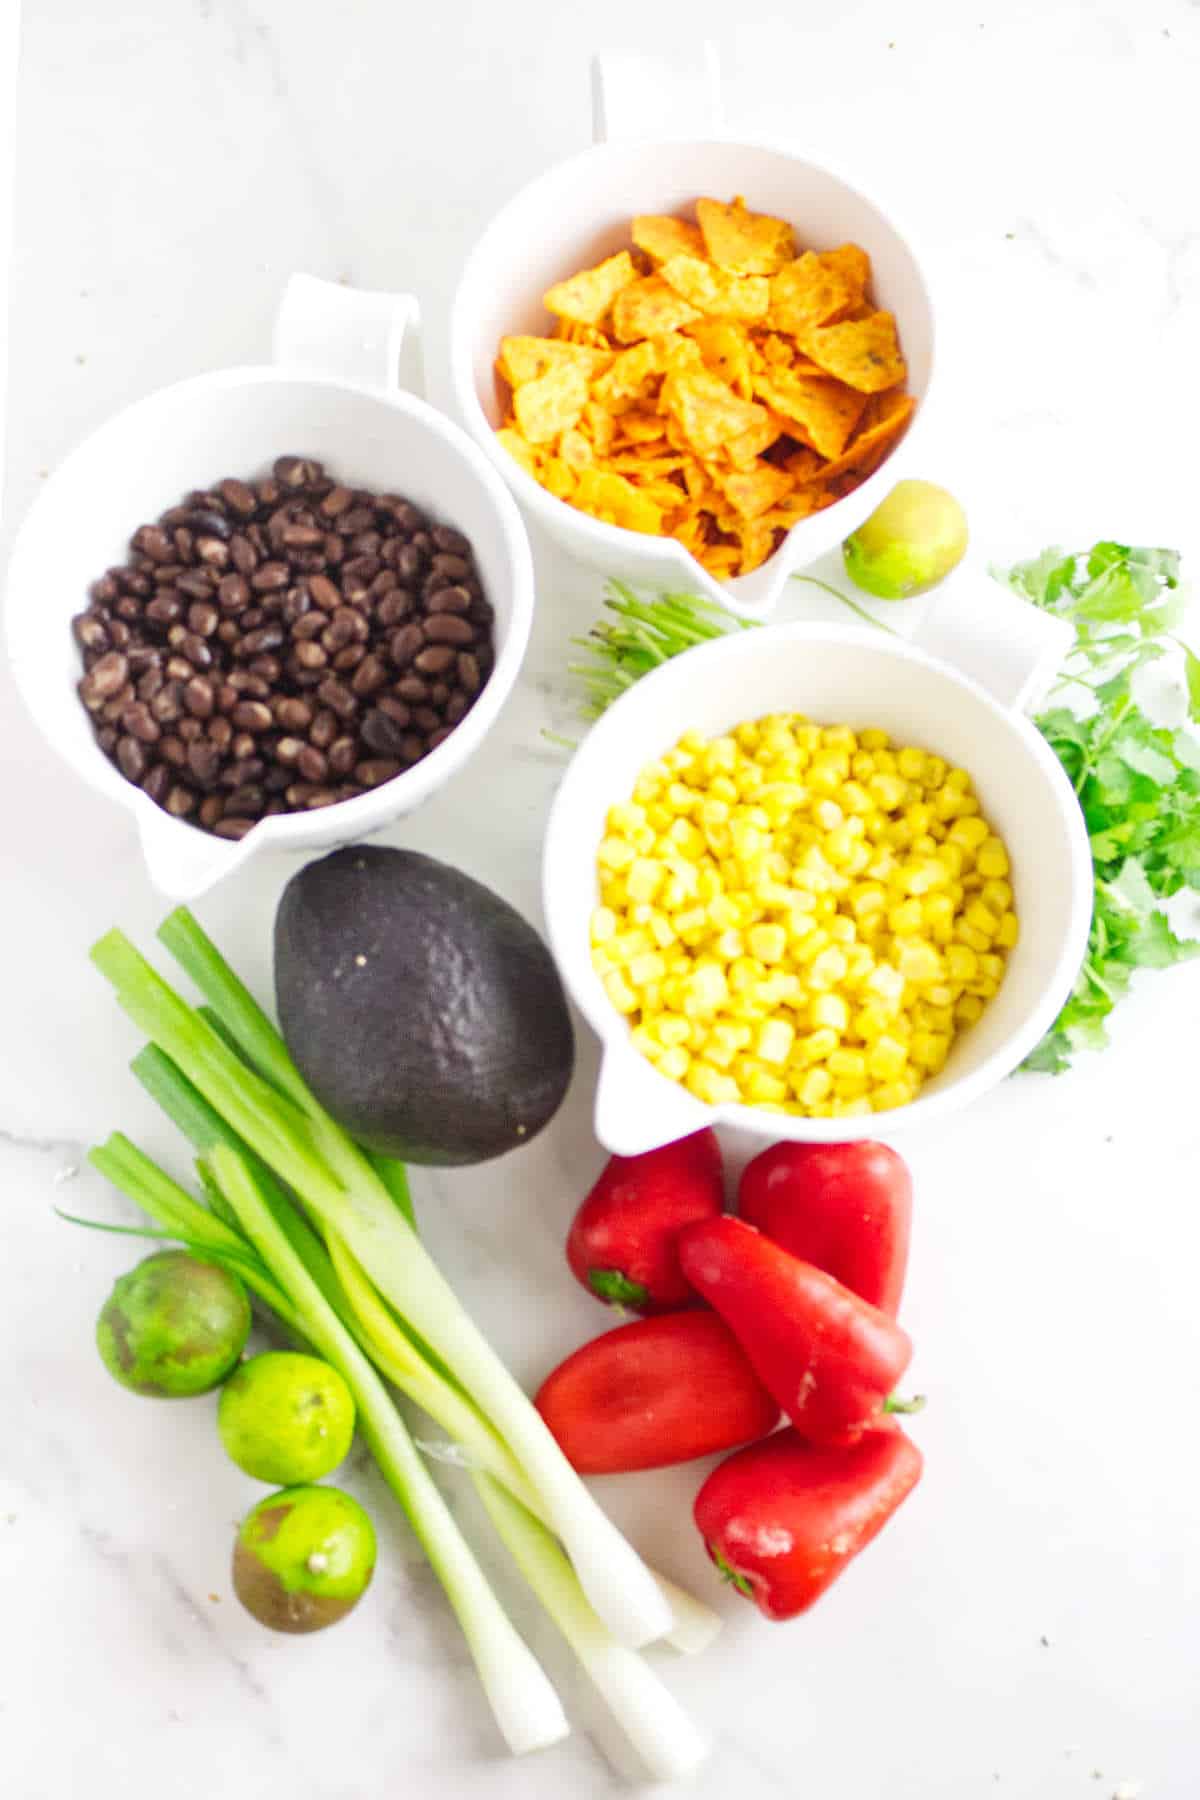 ingredients for making a doritos corn salad.